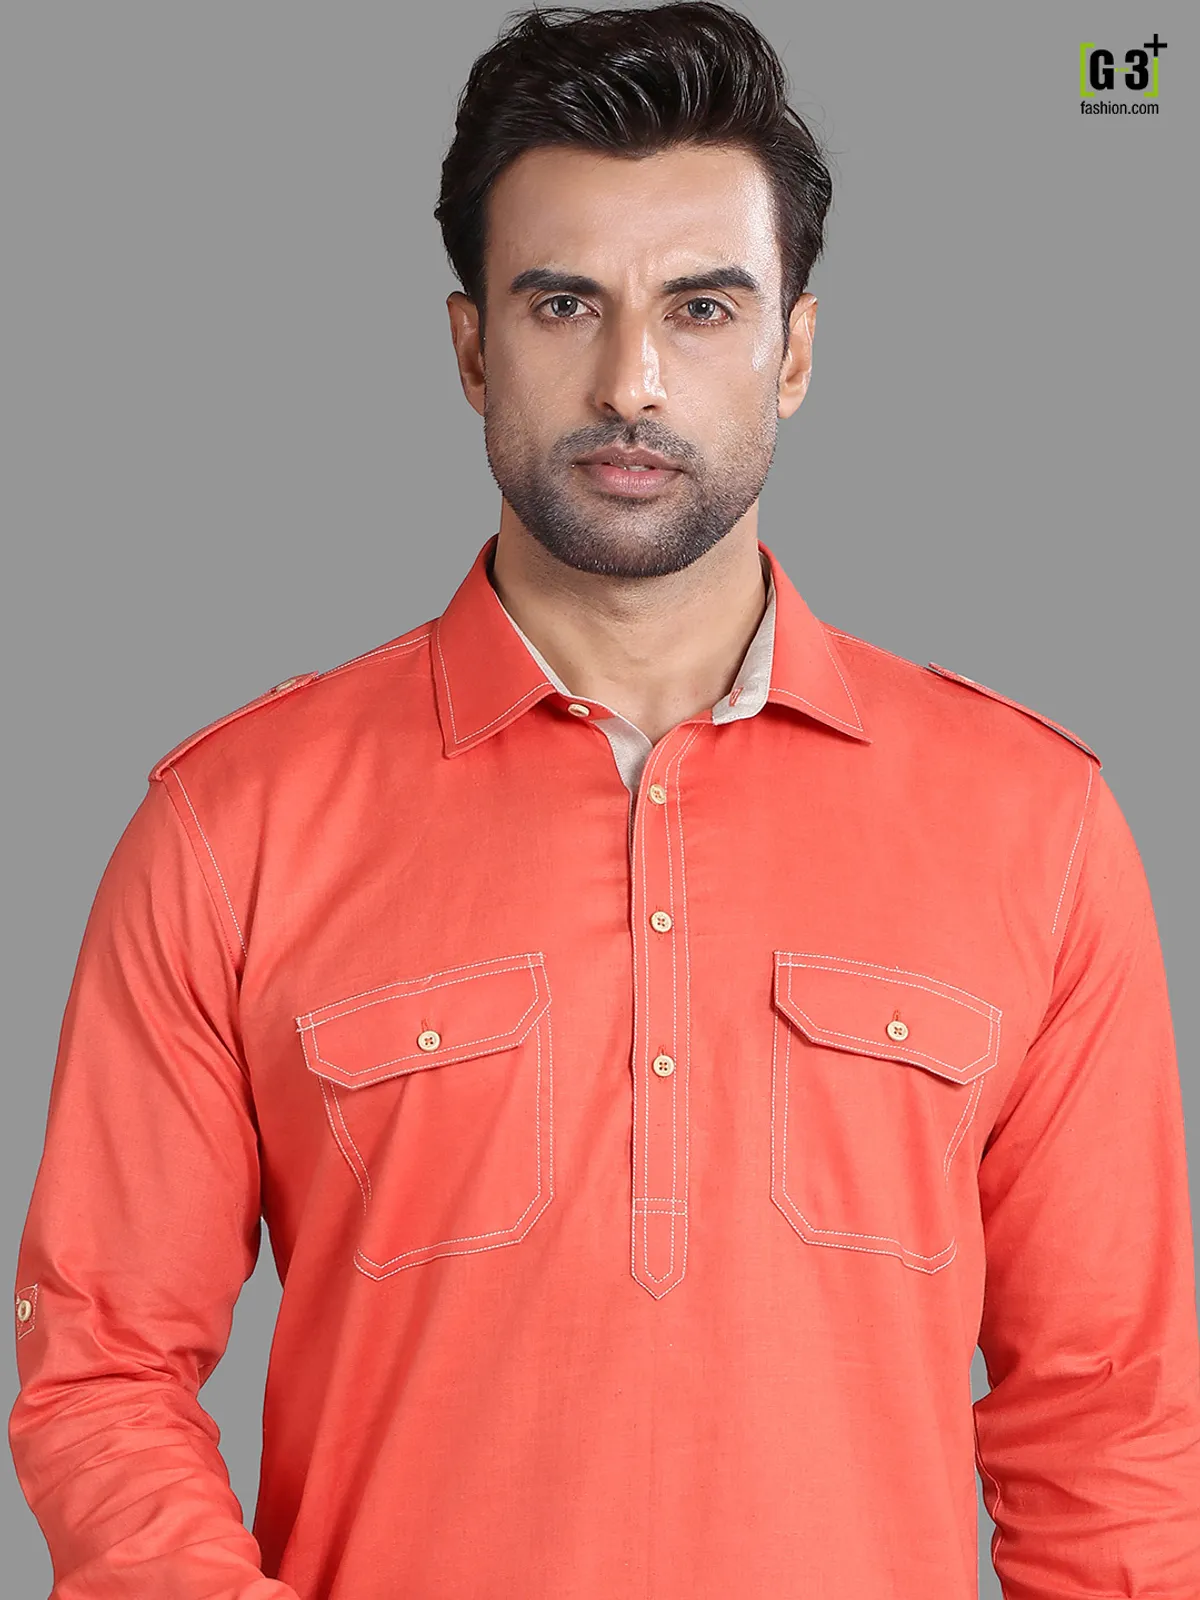 Exclusive orange cotton rayon pathani suit